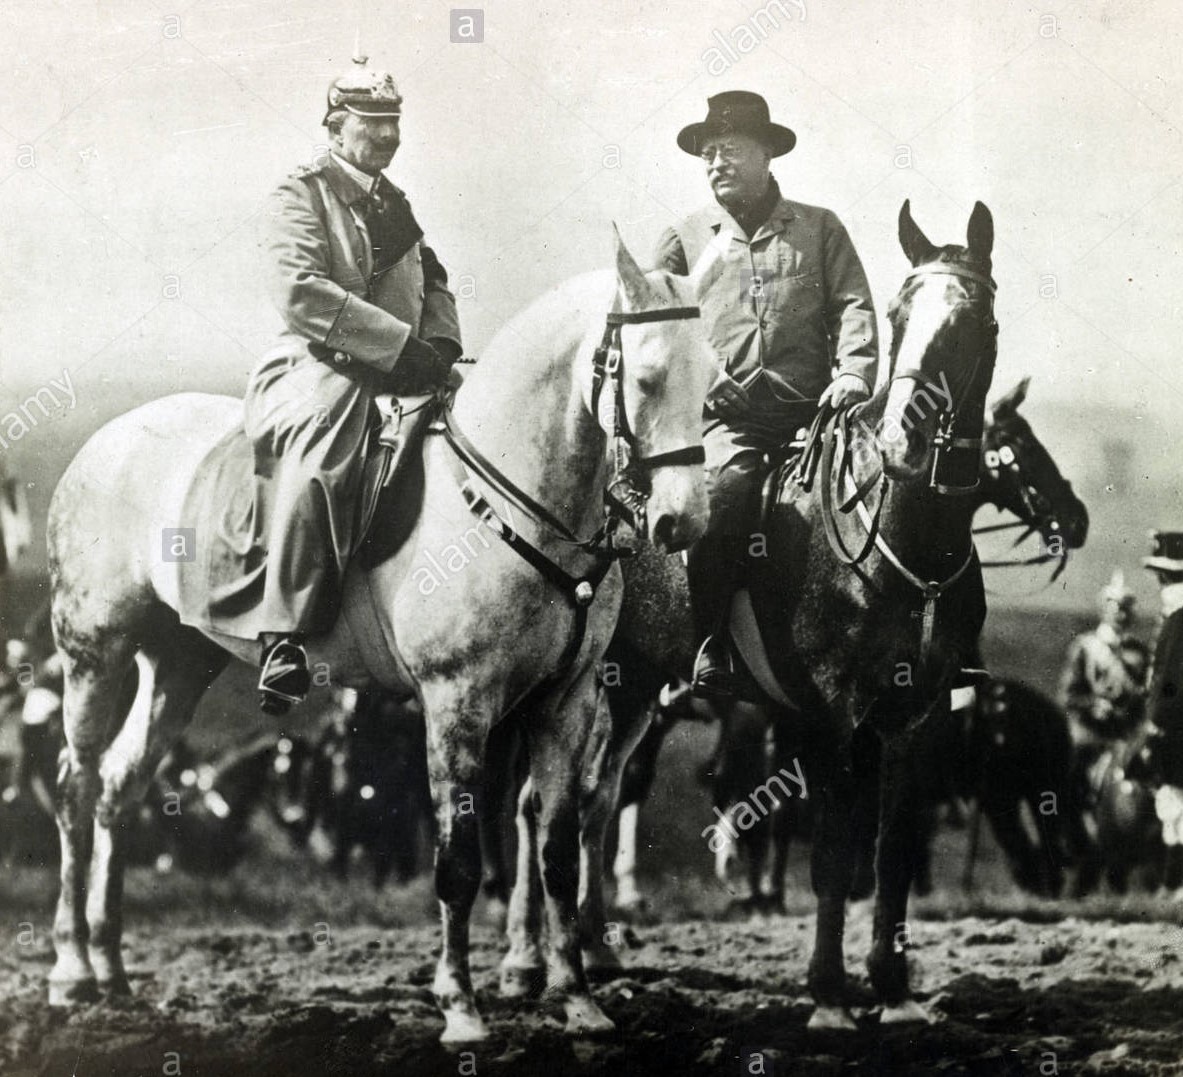 theodore-roosevelt-riding-on-horseback-with-kaiser-wilhelm-ii-DTMK6W.jpg